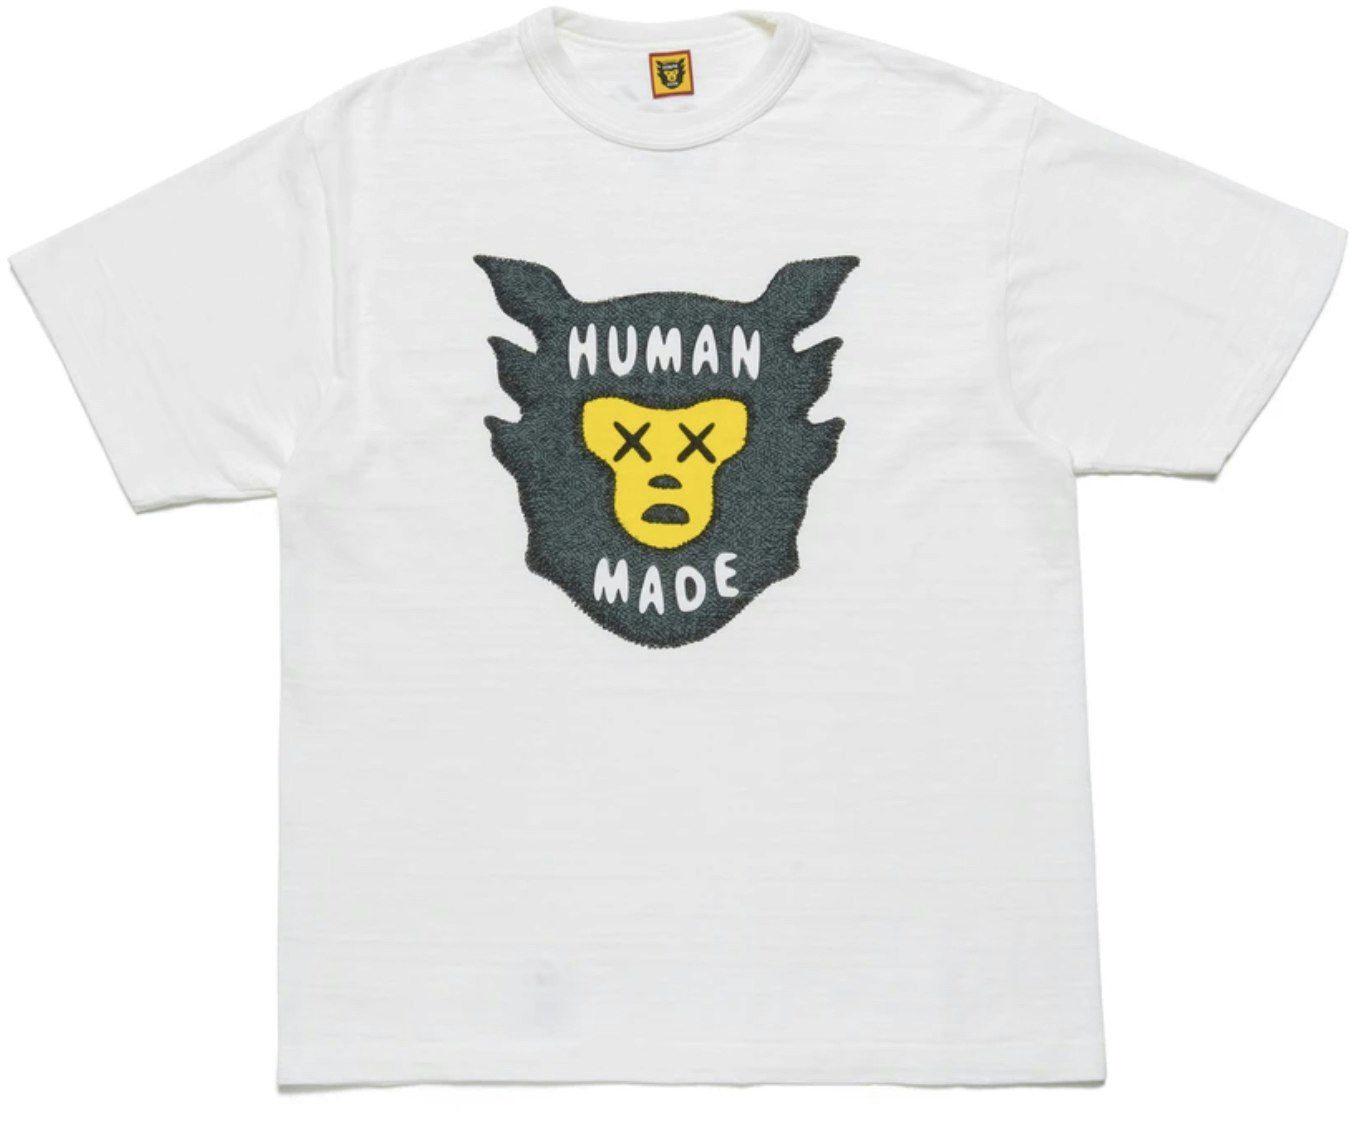 HUMAN MADE x KAWS Made Graphic T-Shirtトップス